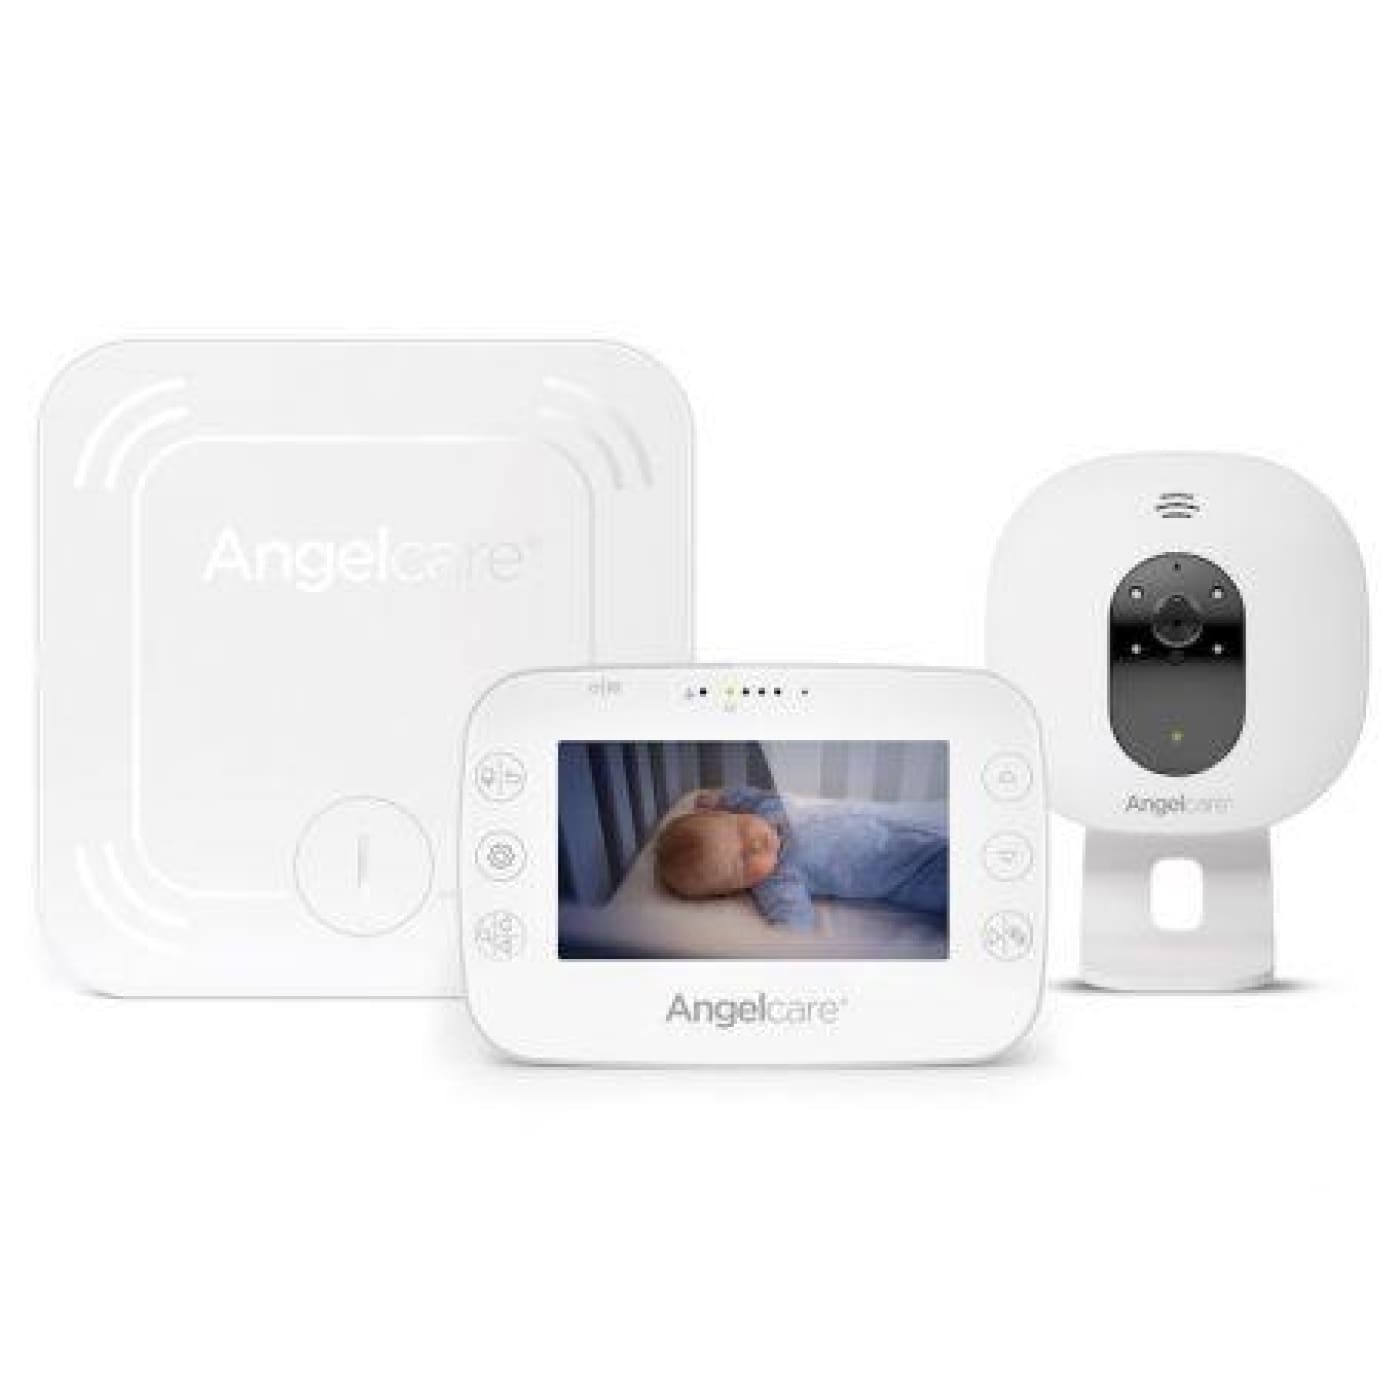 Angelcare Movement Video & Sound Monitor 4.3inch Screen SensAsure Sensor Pad - HEALTH & HOME SAFETY - BABY MONITORS